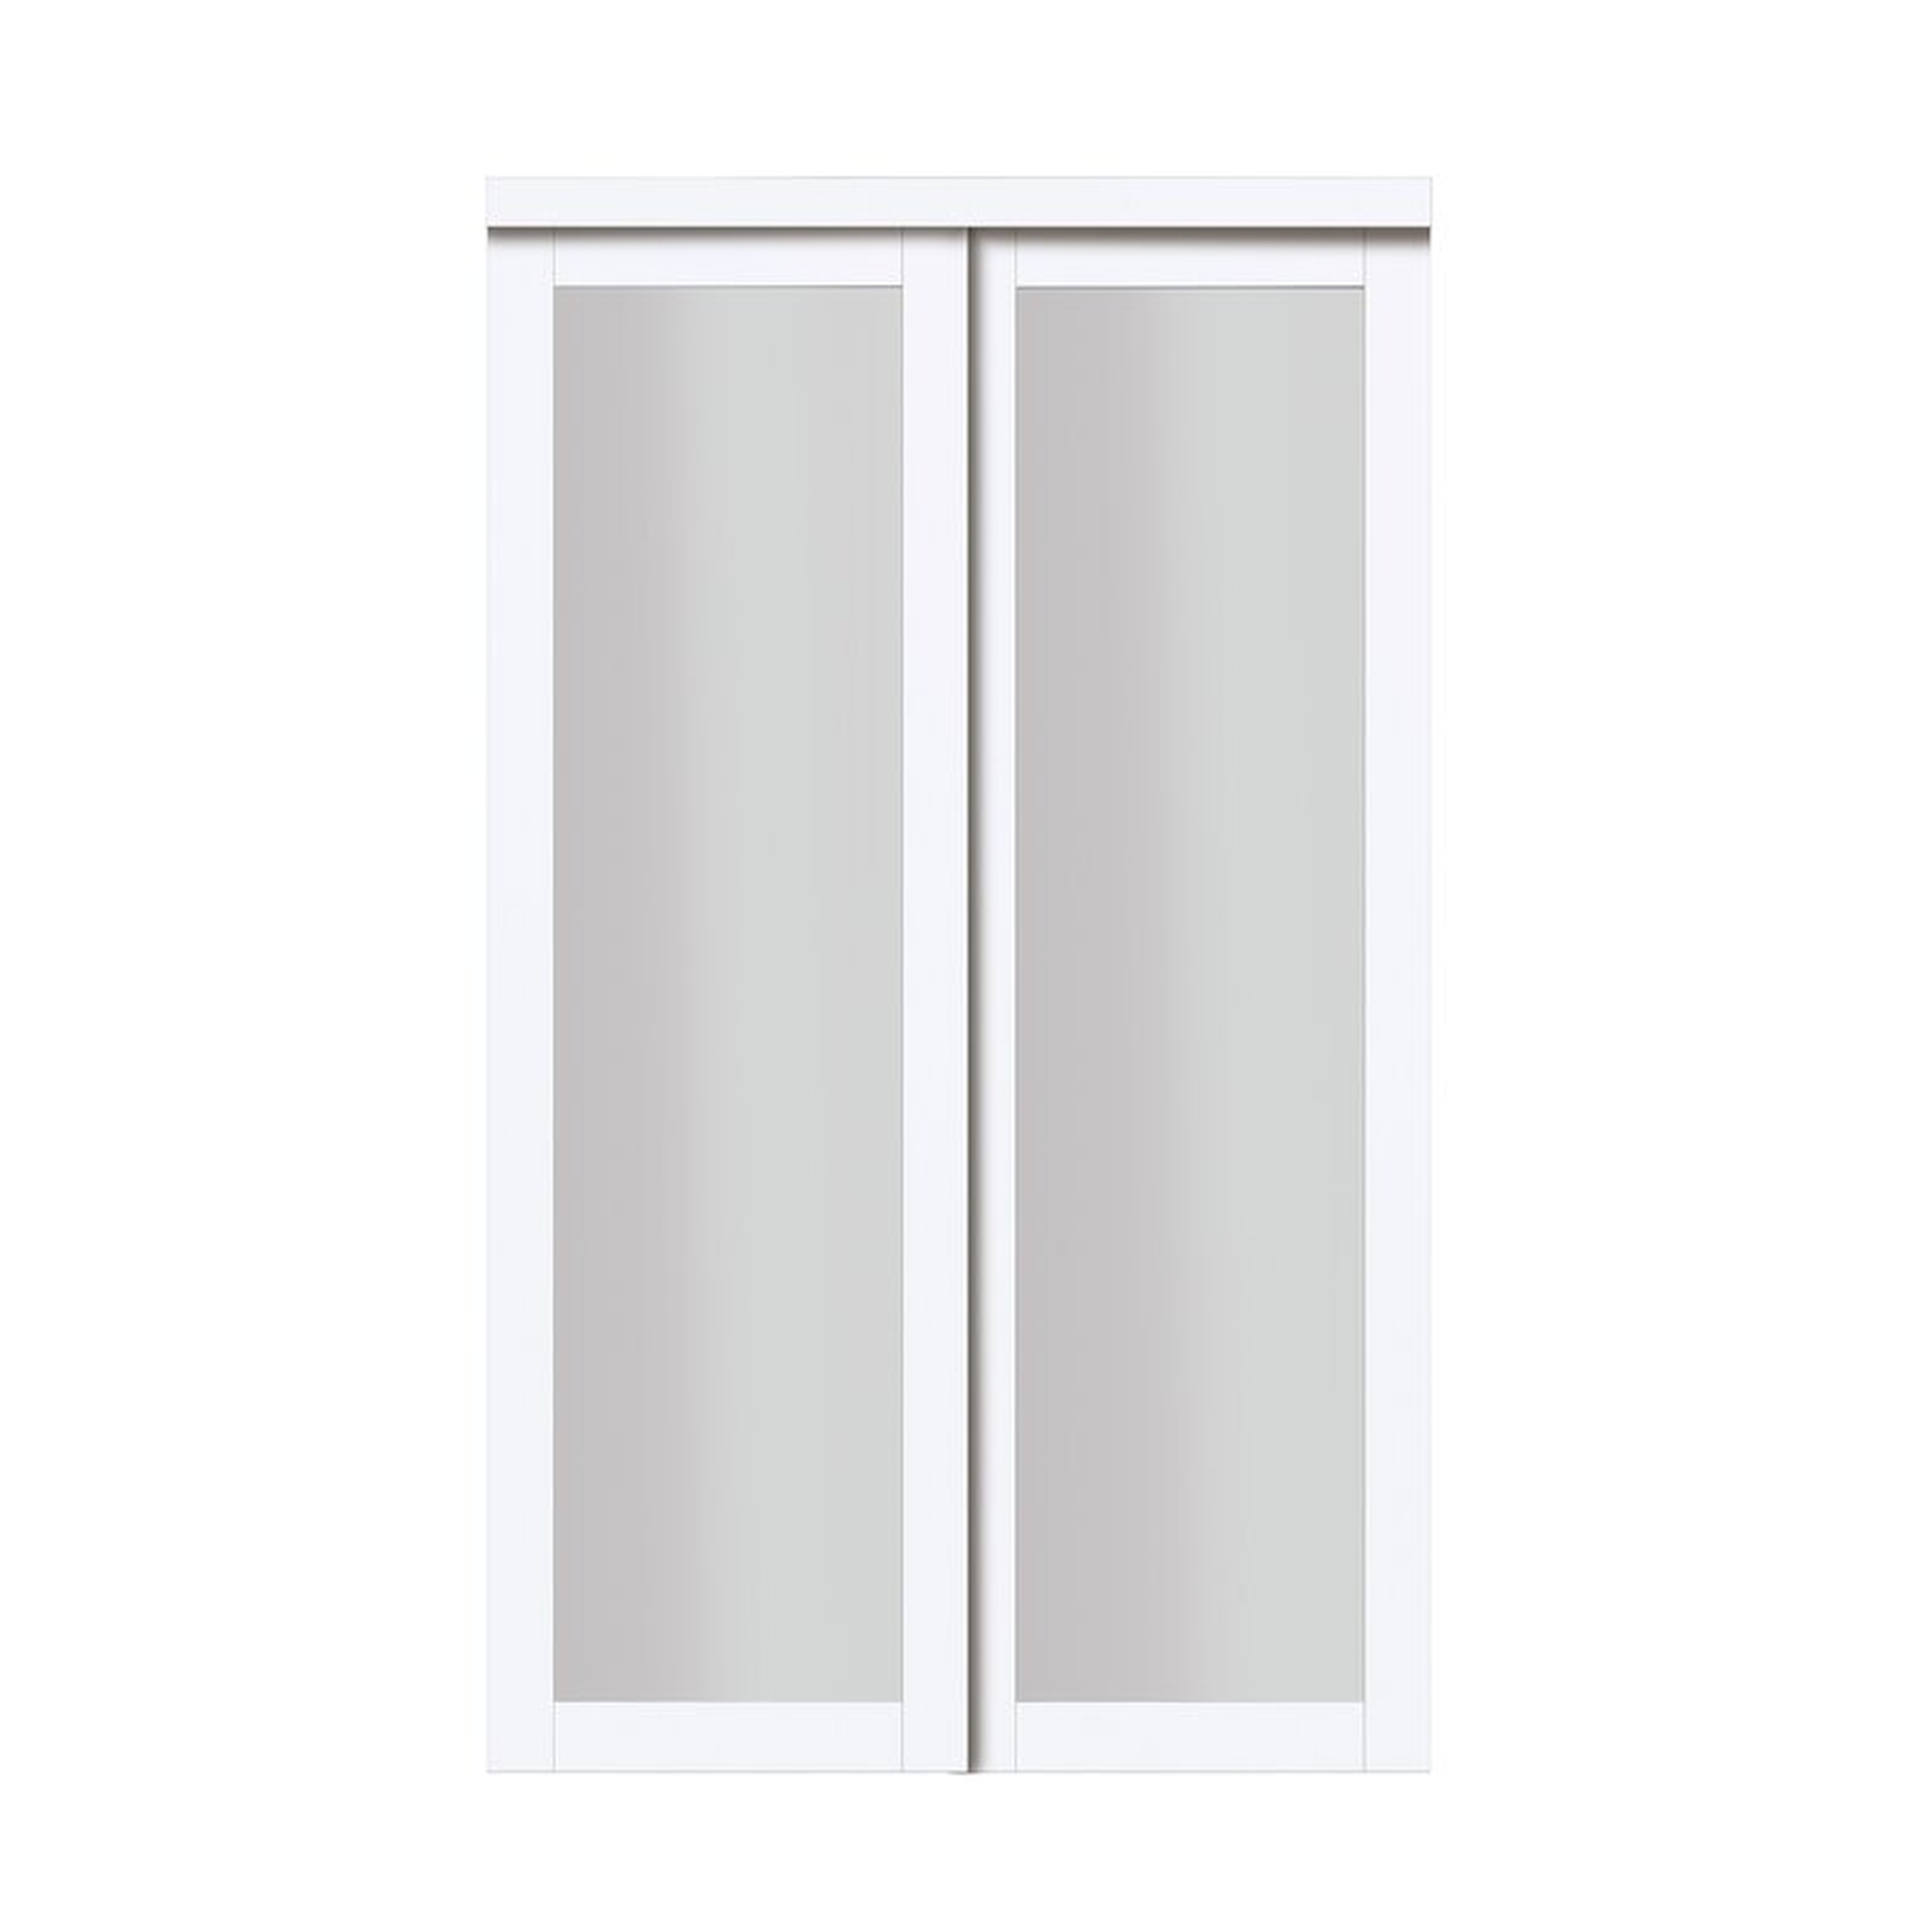 Baldarassario Glass Sliding Closet Door with Installation Hardware Kit - Wayfair